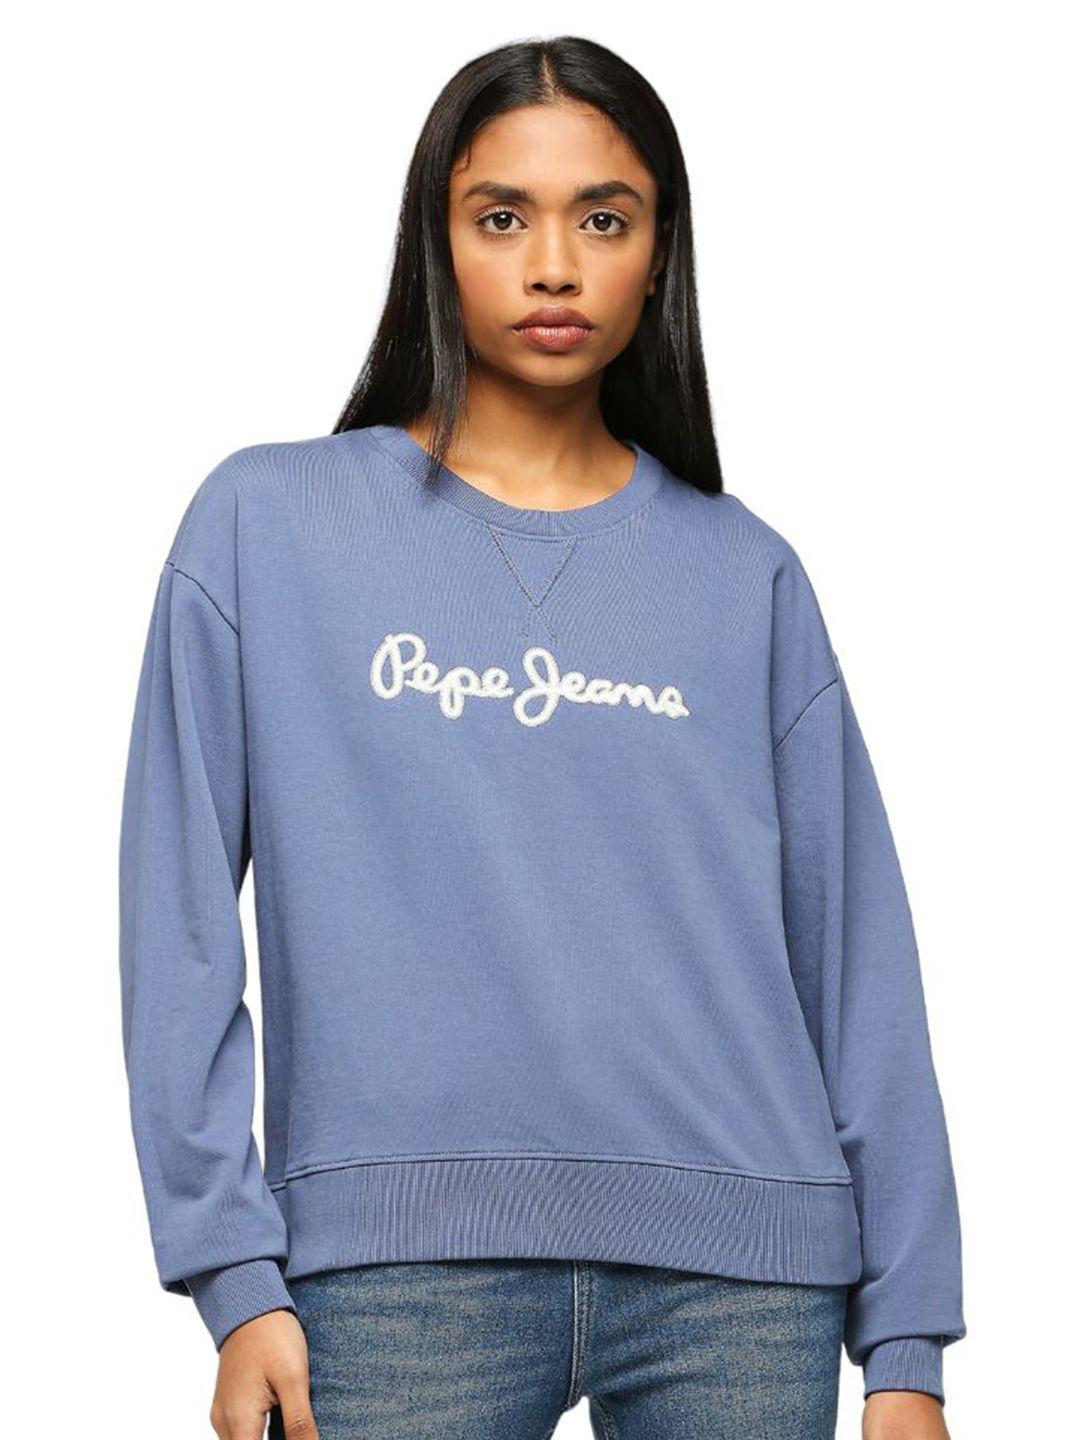 pepe jeans typography printed pure cotton sweatshirt